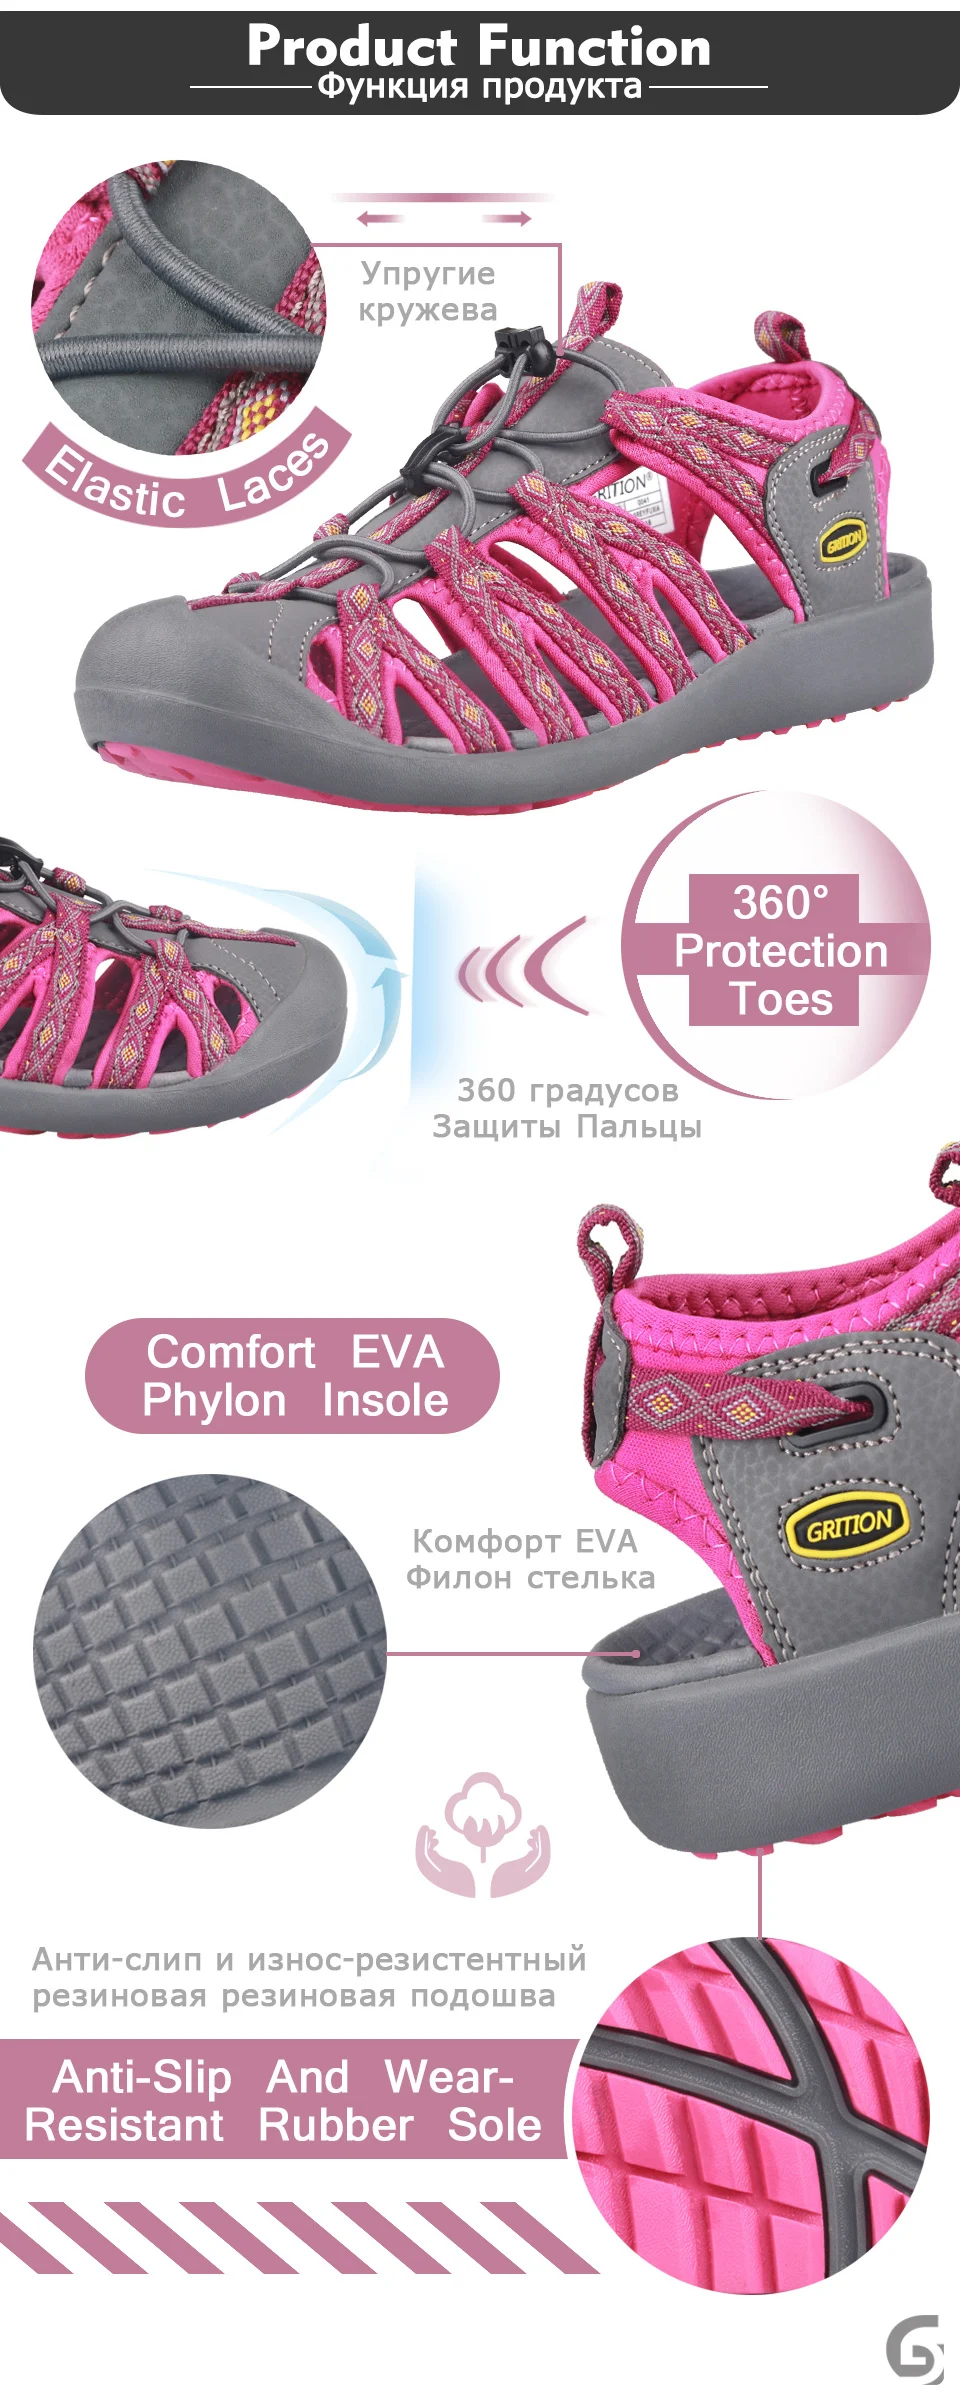 GRITION Women Platform Wedges Beach Sandals Trekking Outdoor Hiking Shoes Summer Flat Casual Sport Sandal 2021 New Fashion 36-41